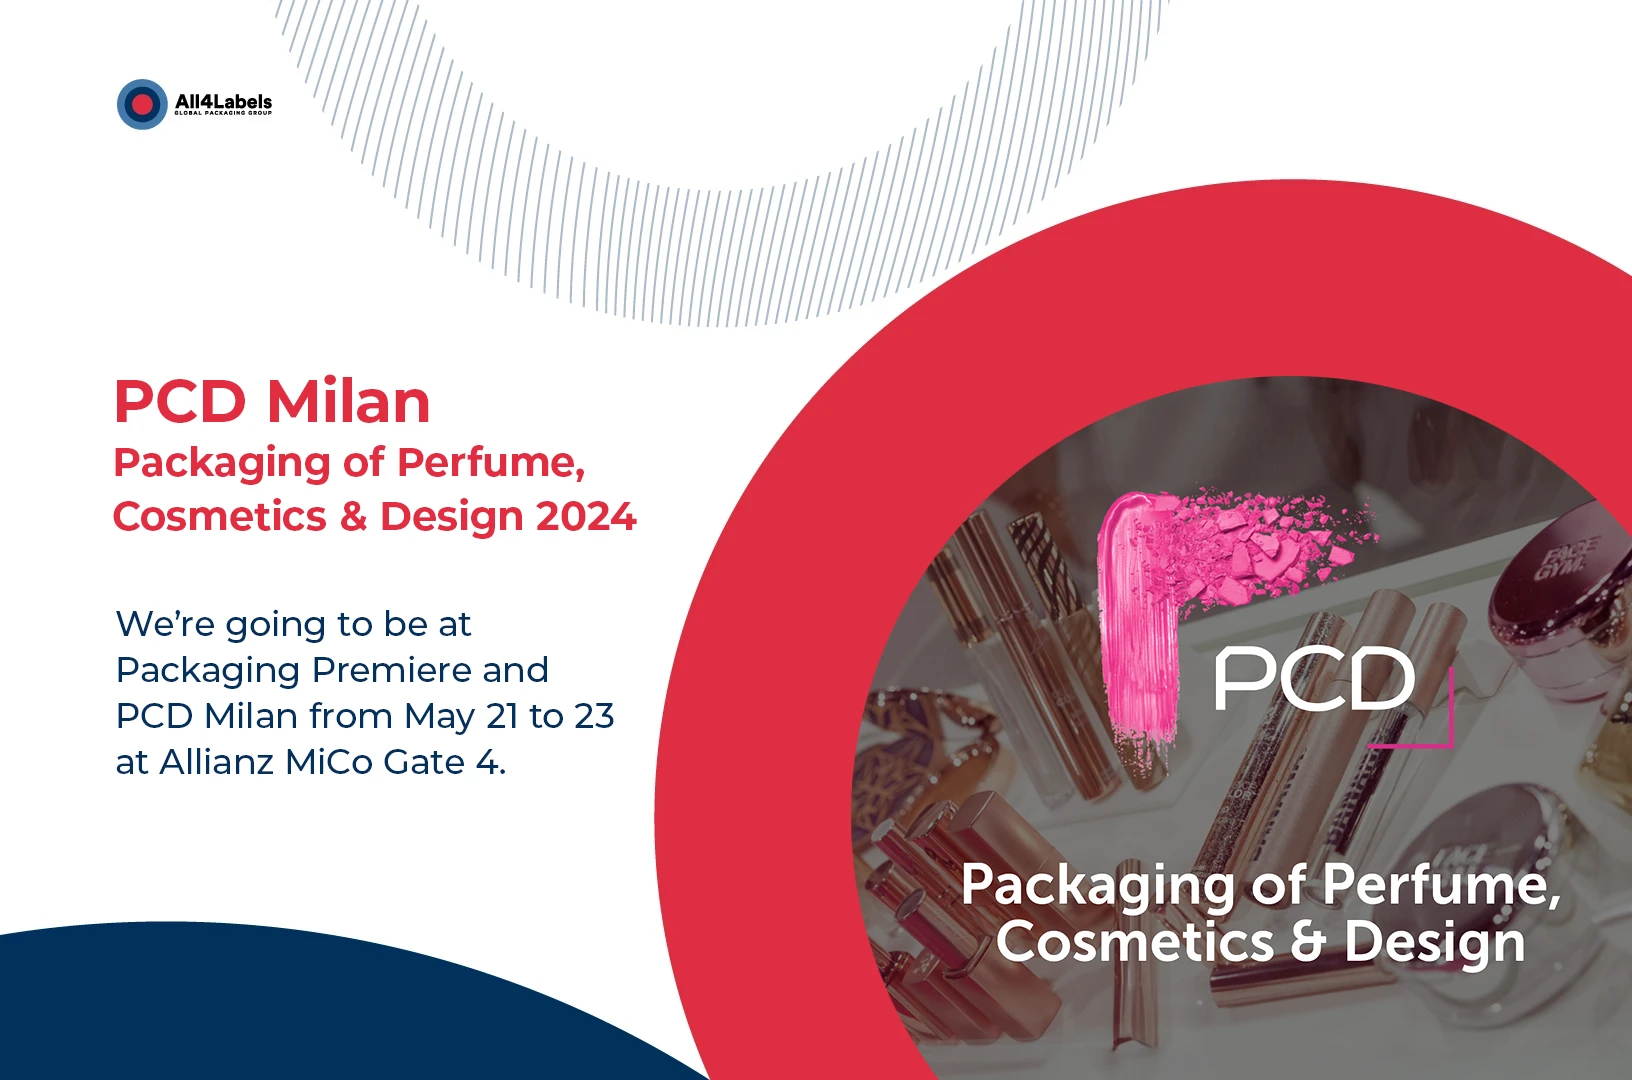 PCD Milan event